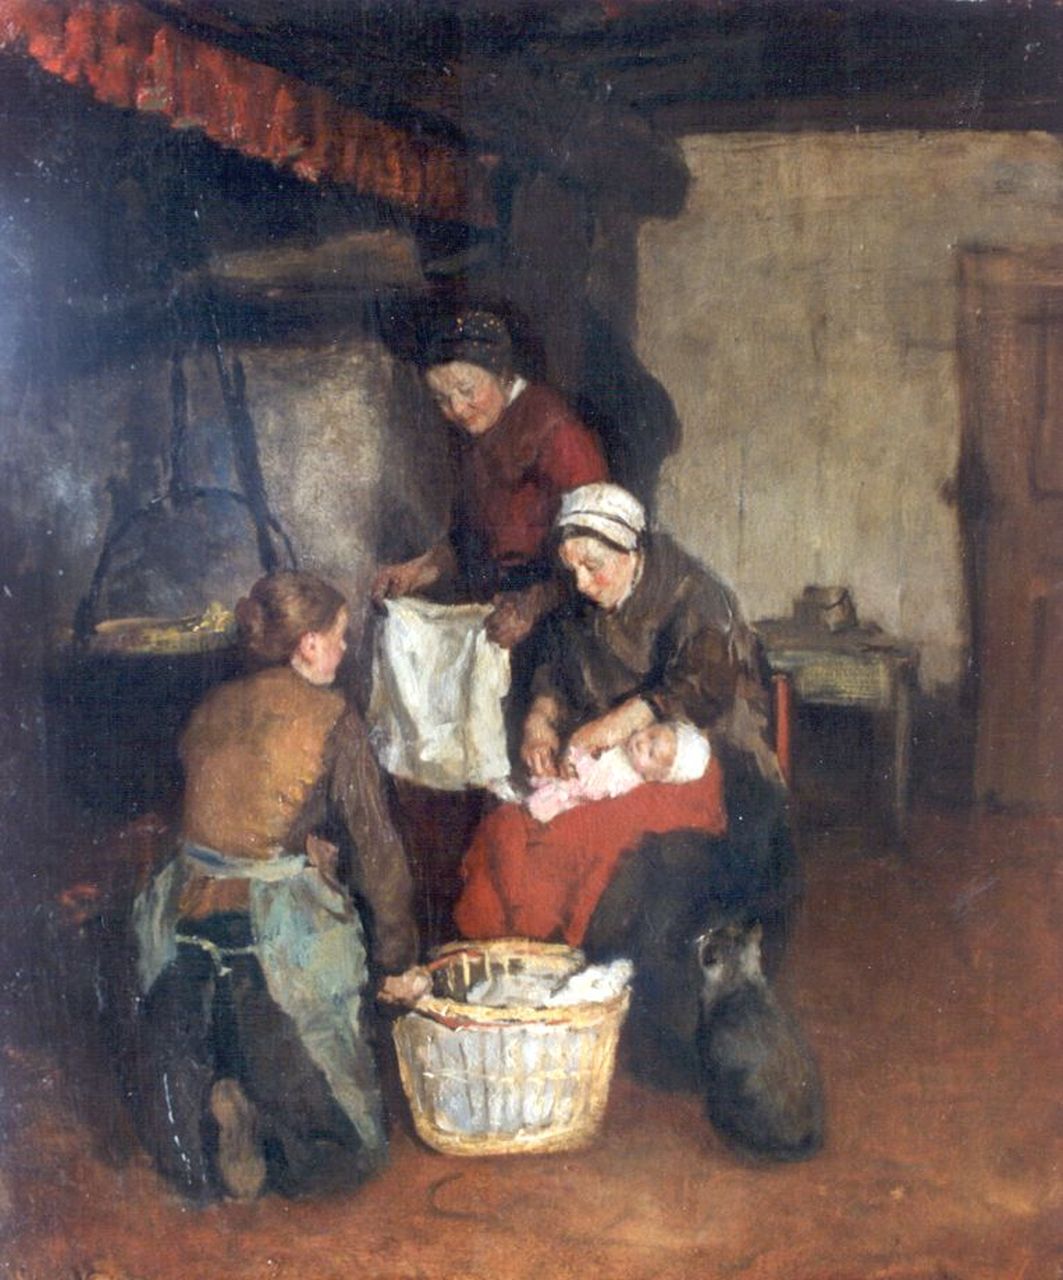 Neuhuys J.A.  | Johannes 'Albert' Neuhuys, Kind verschonen, olieverf op doek 62,0 x 50,0 cm, gesigneerd linksonder